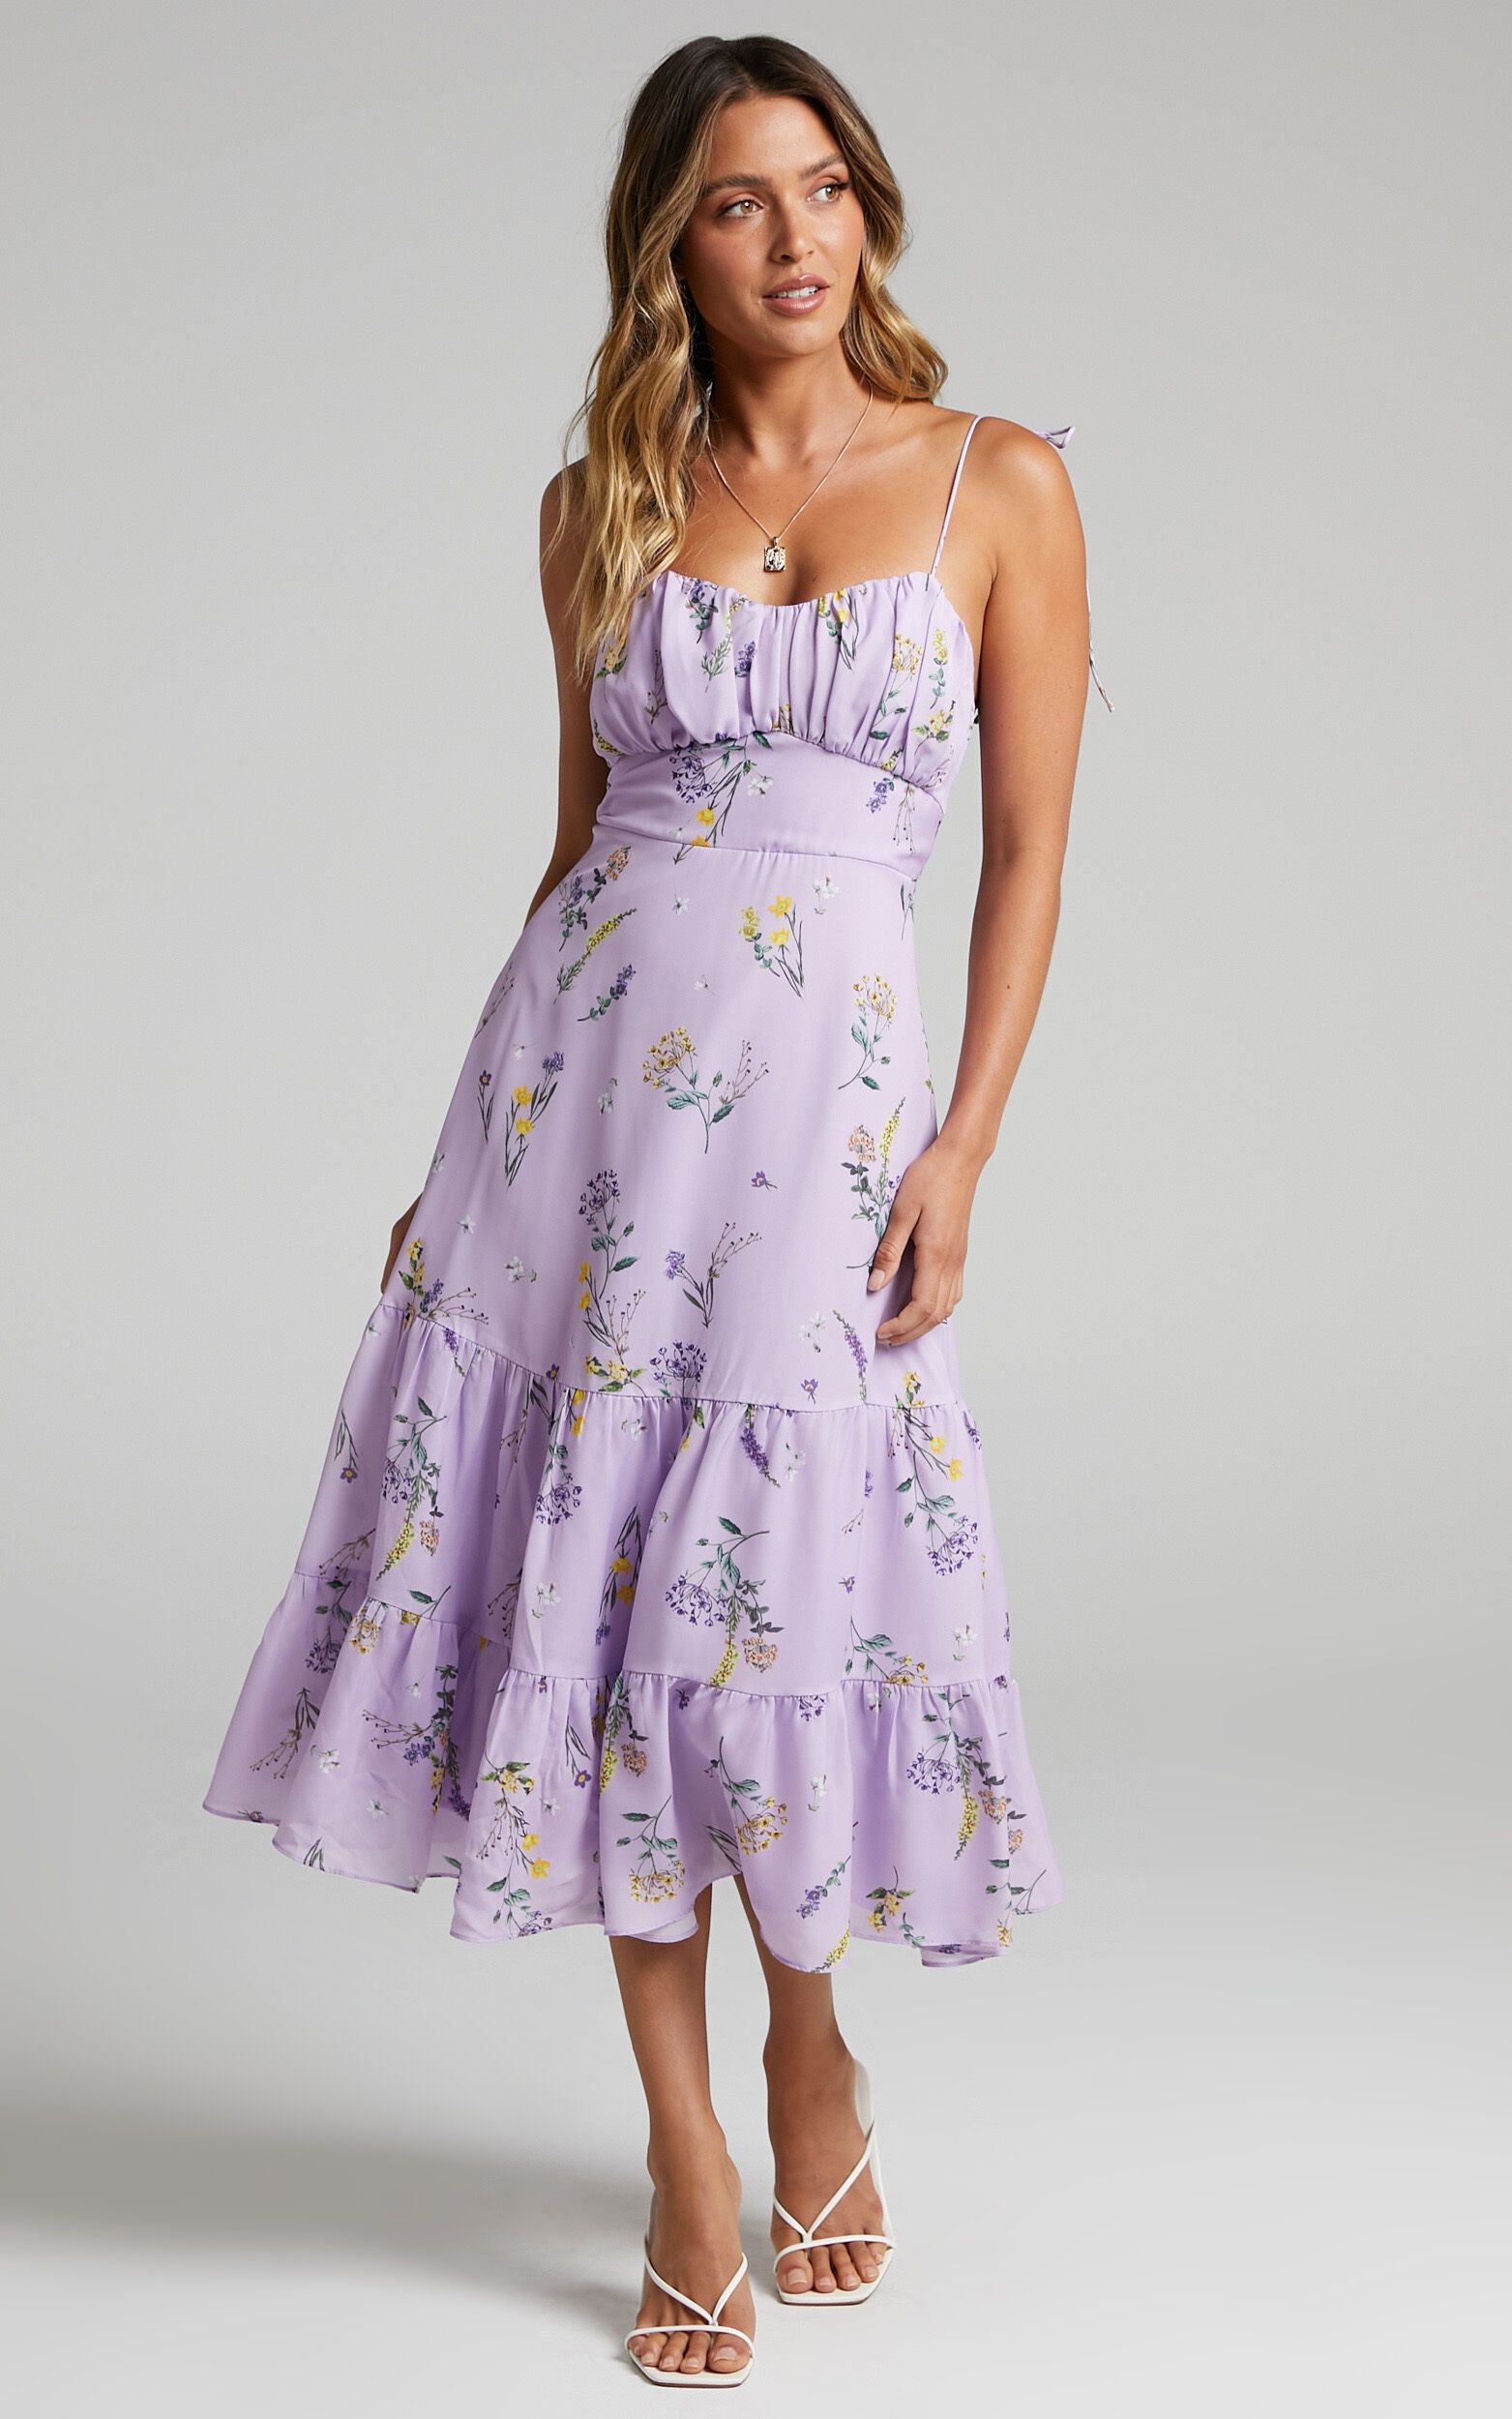 Monaco Sweetheart Midi Dress in Lavender Botanical Floral | Showpo (US, UK & Europe)